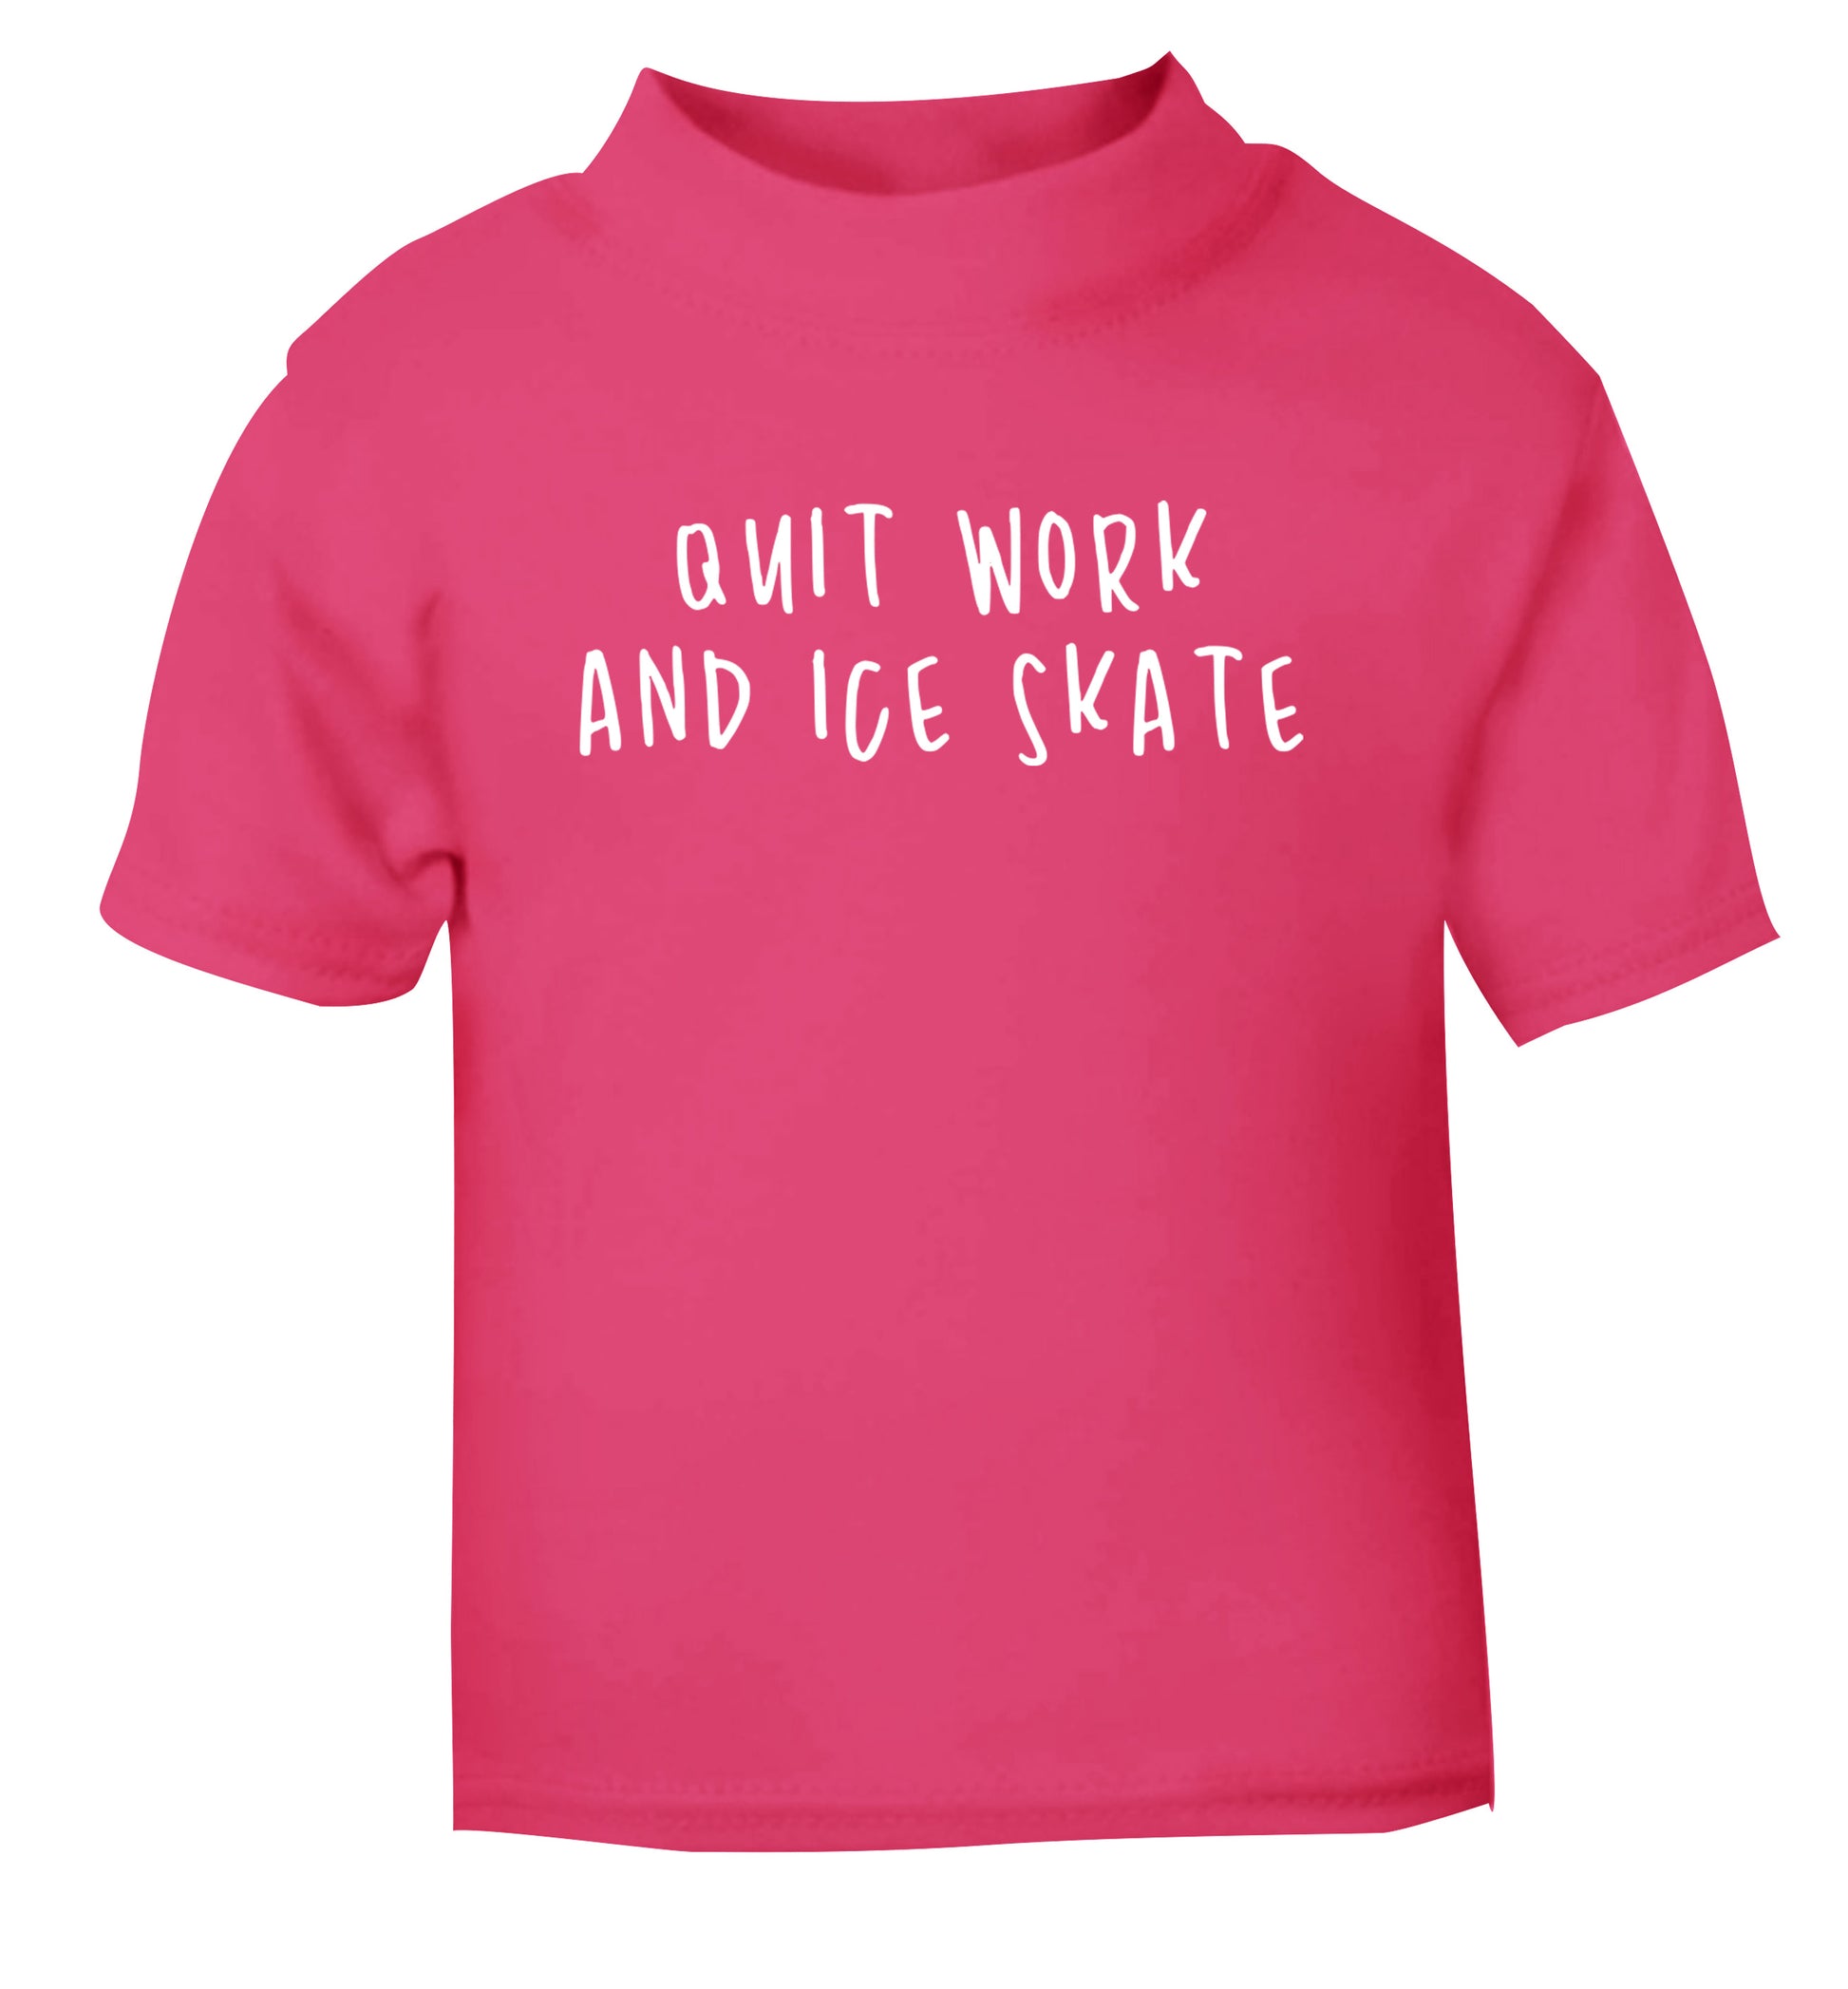 Quit work ice skate pink Baby Toddler Tshirt 2 Years